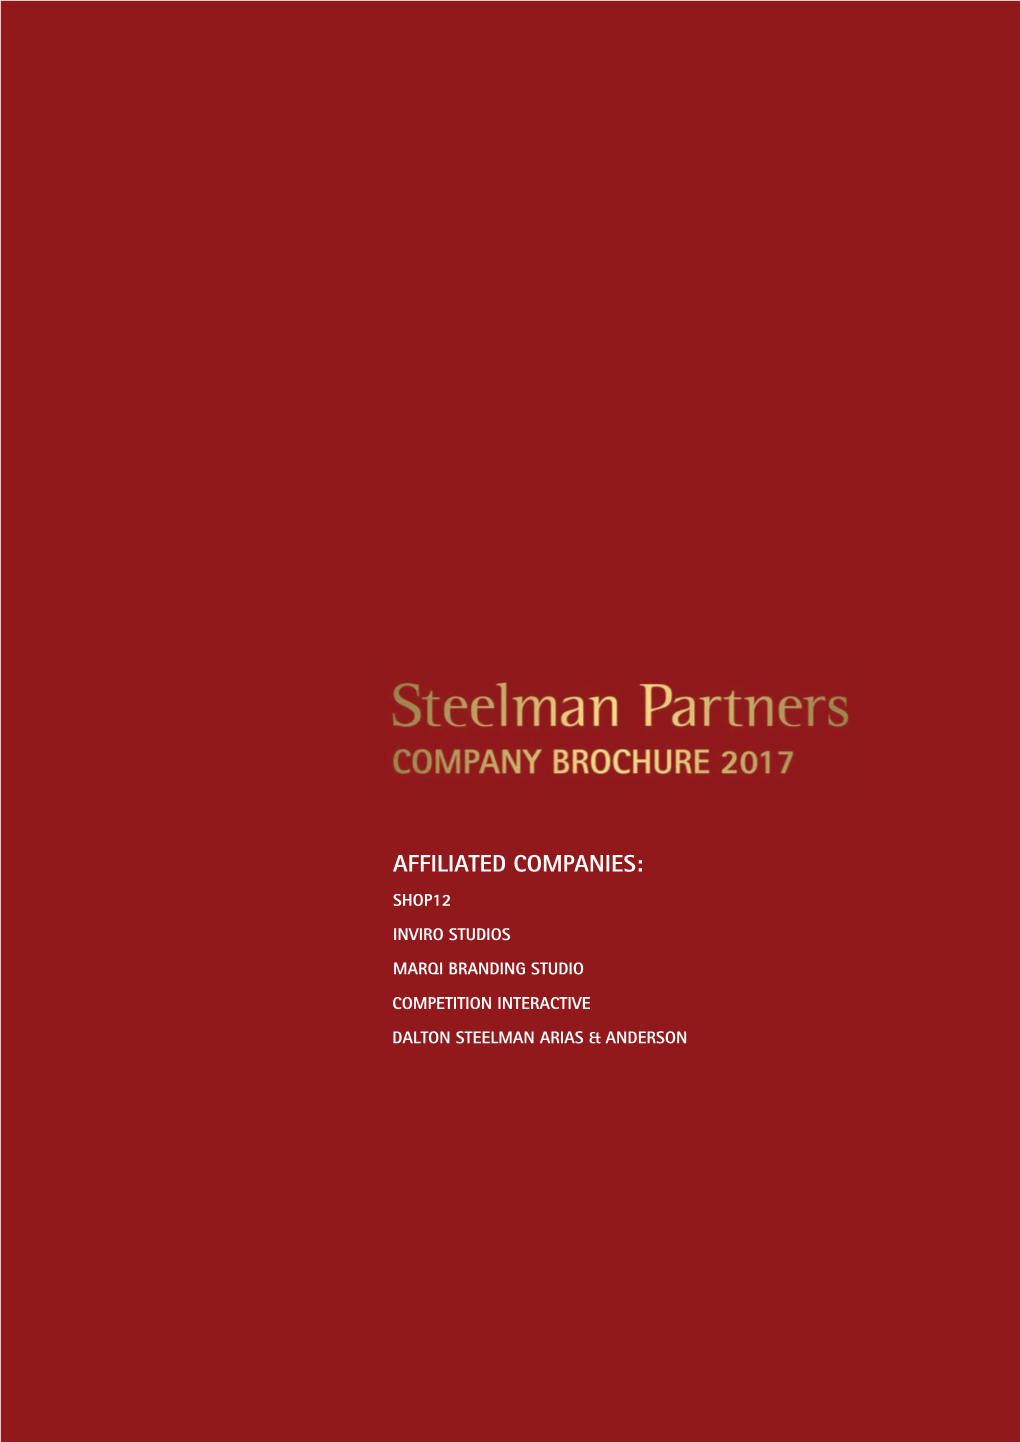 Steelman Partners Company Profile 2017